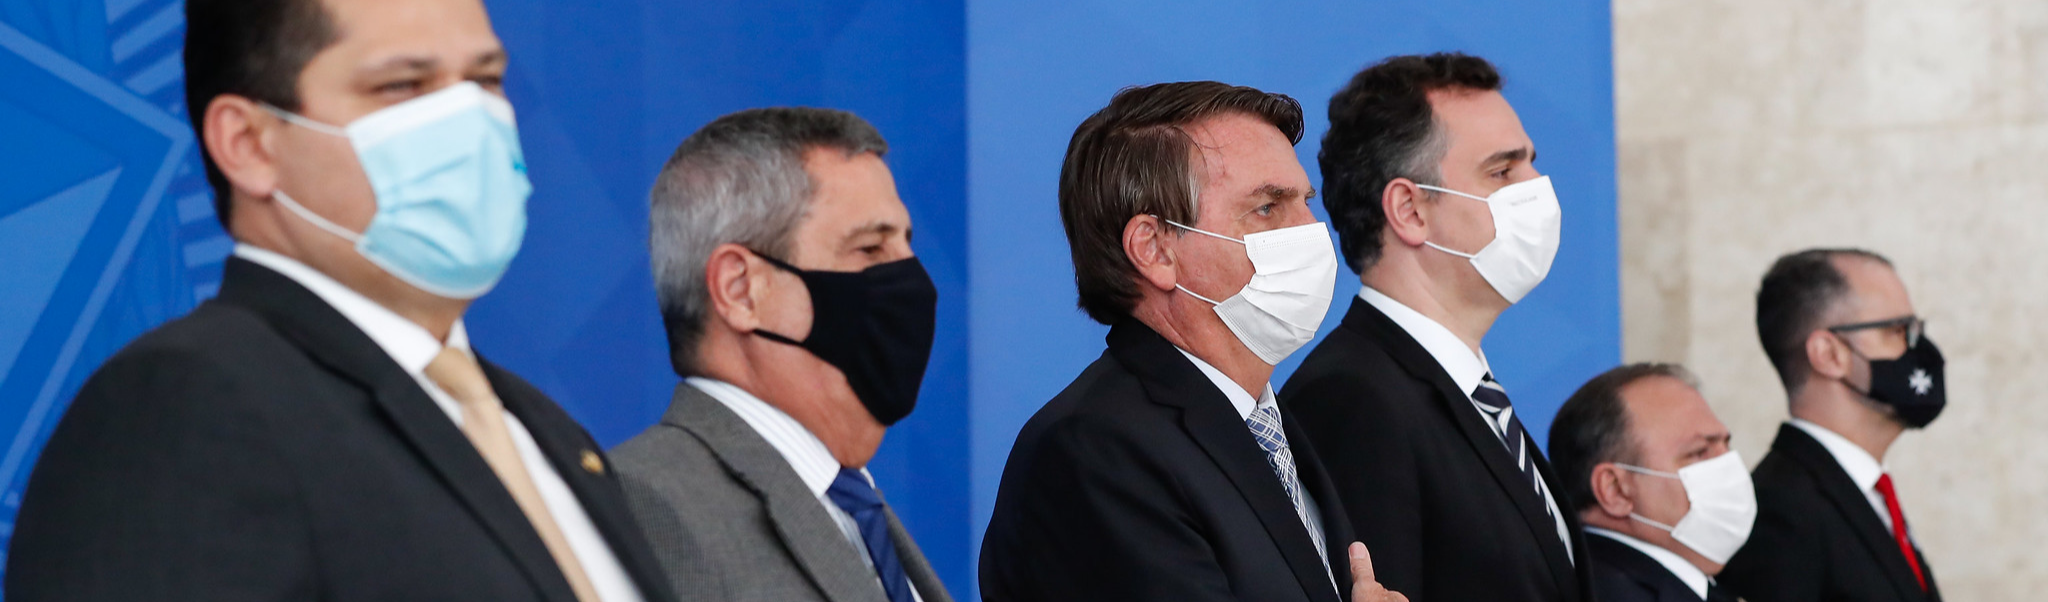 Após discurso de Lula, Bolsonaro muda postura ao usar máscara e defender vacina